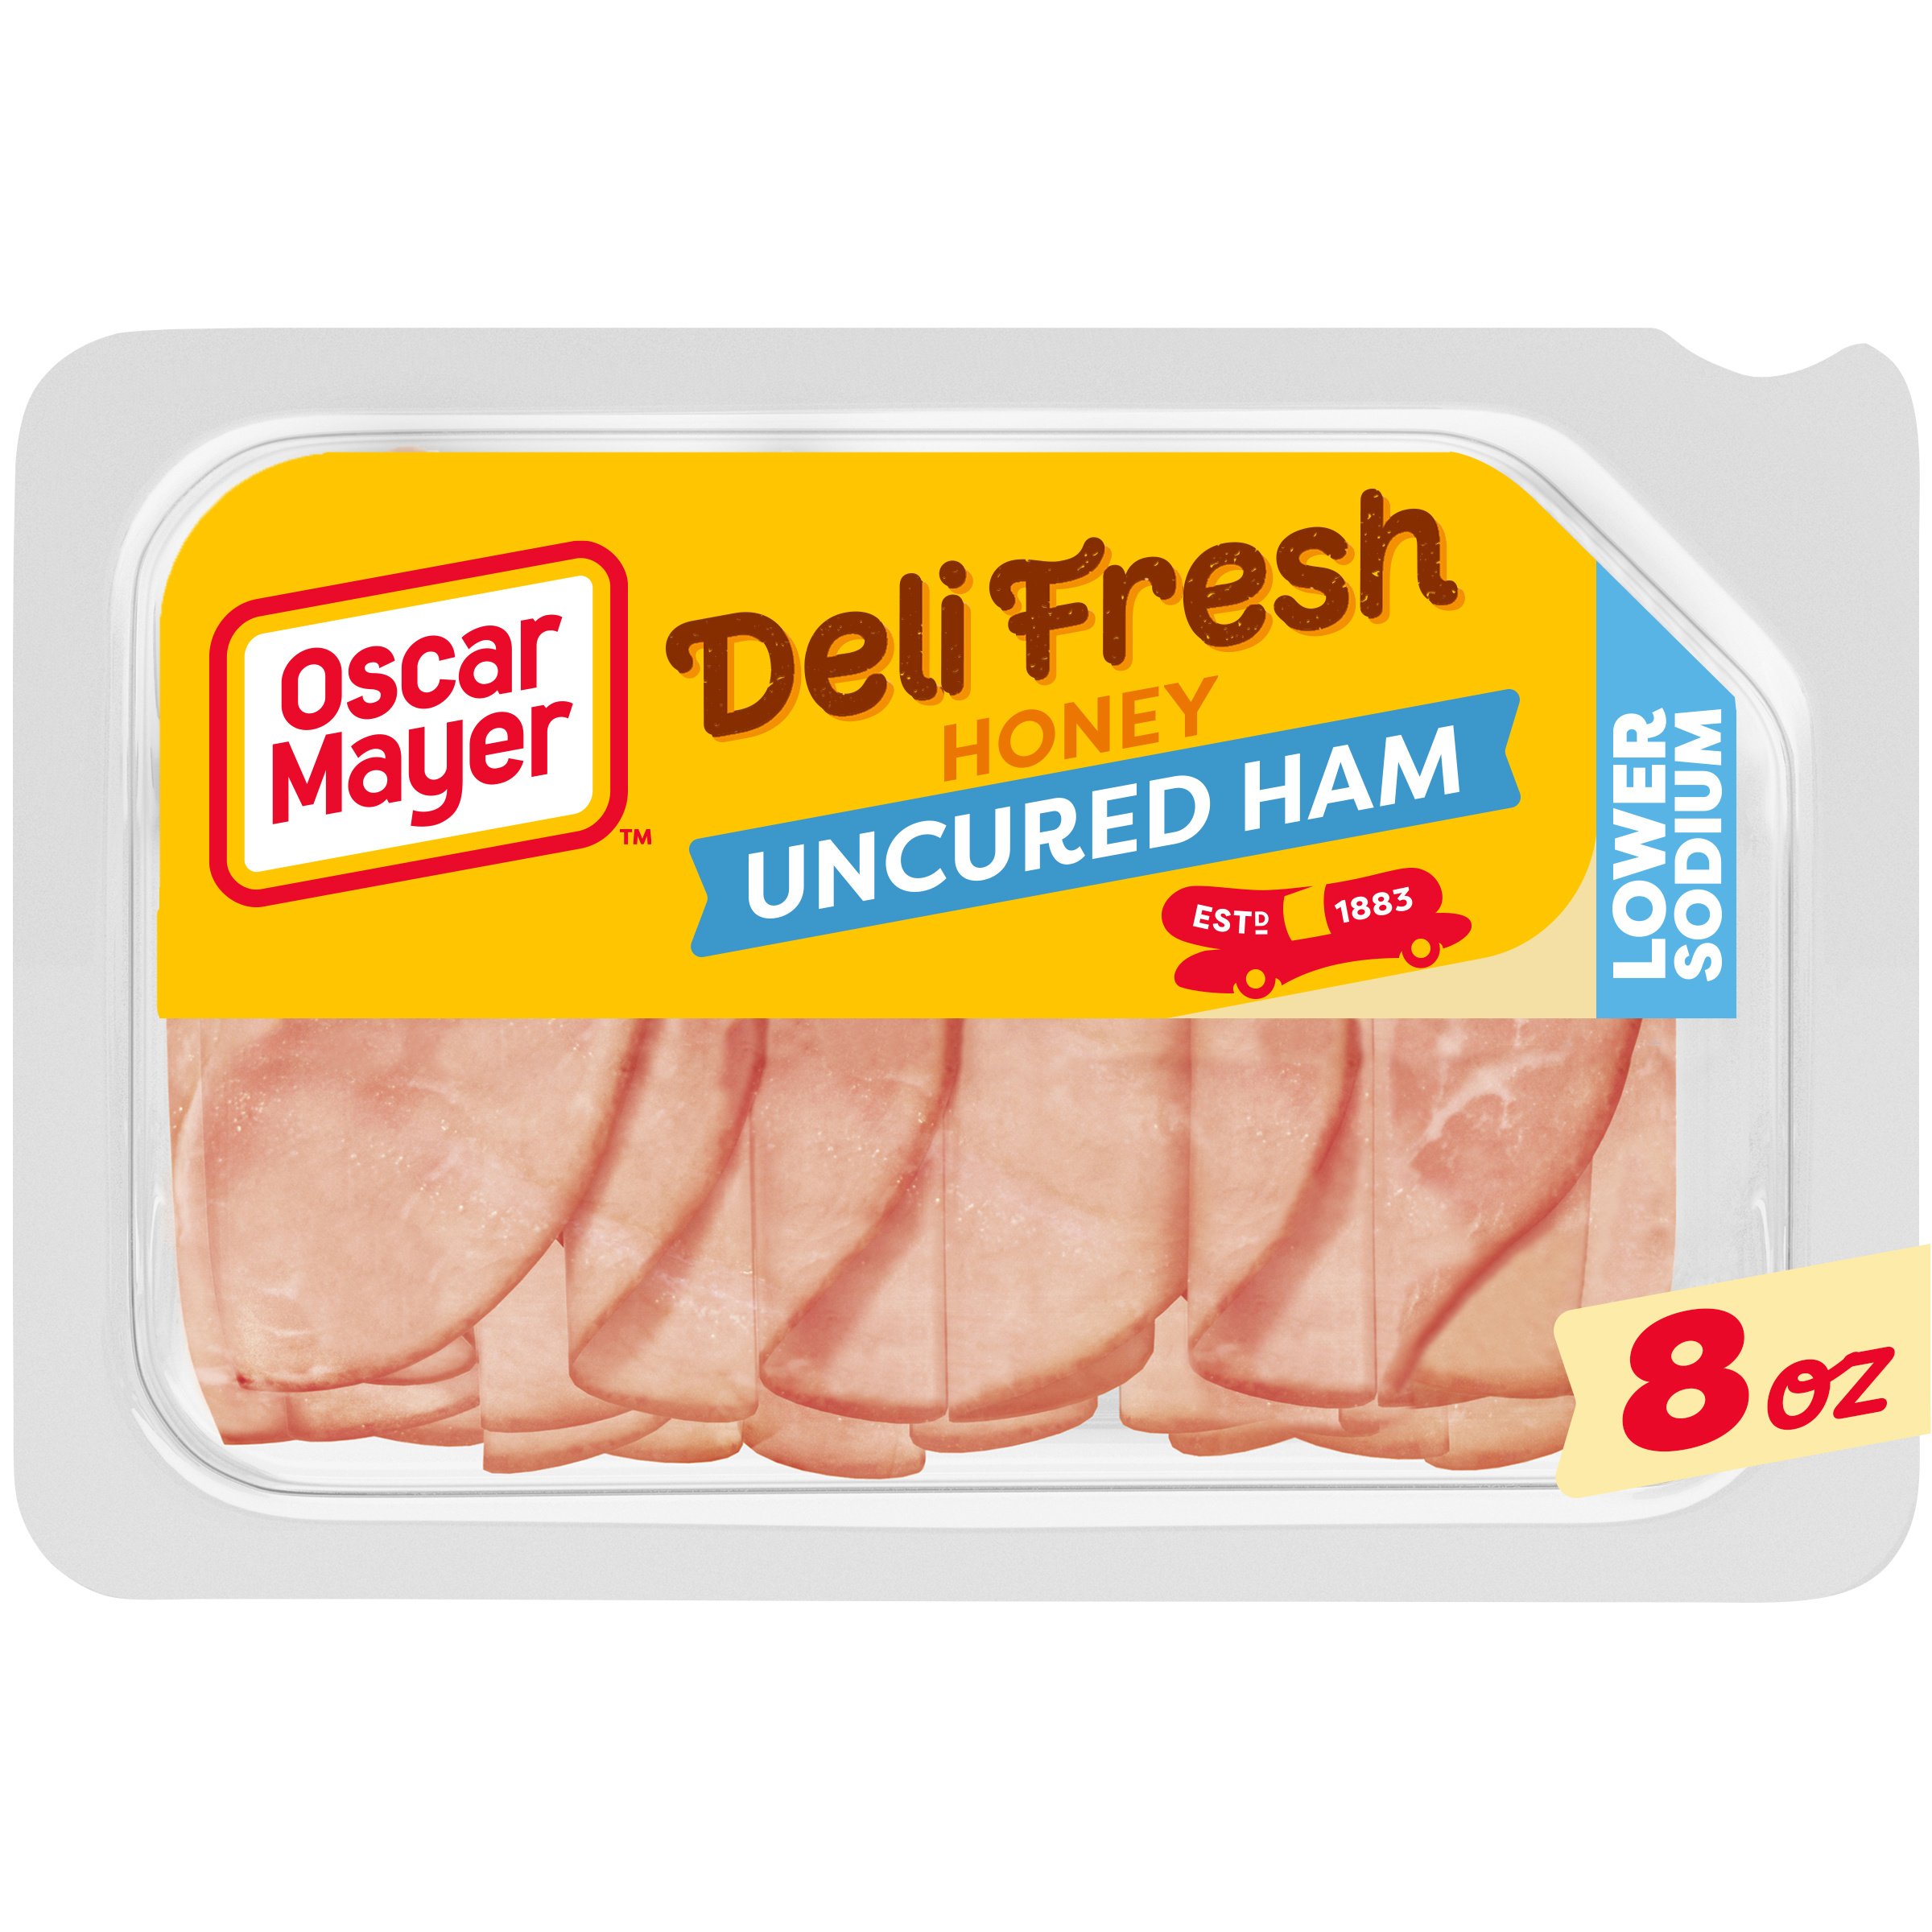 Oscar Mayer Deli Fresh Lower Sodium Honey Uncured Ham Sliced Lunch Meat Shop Meat At H E B